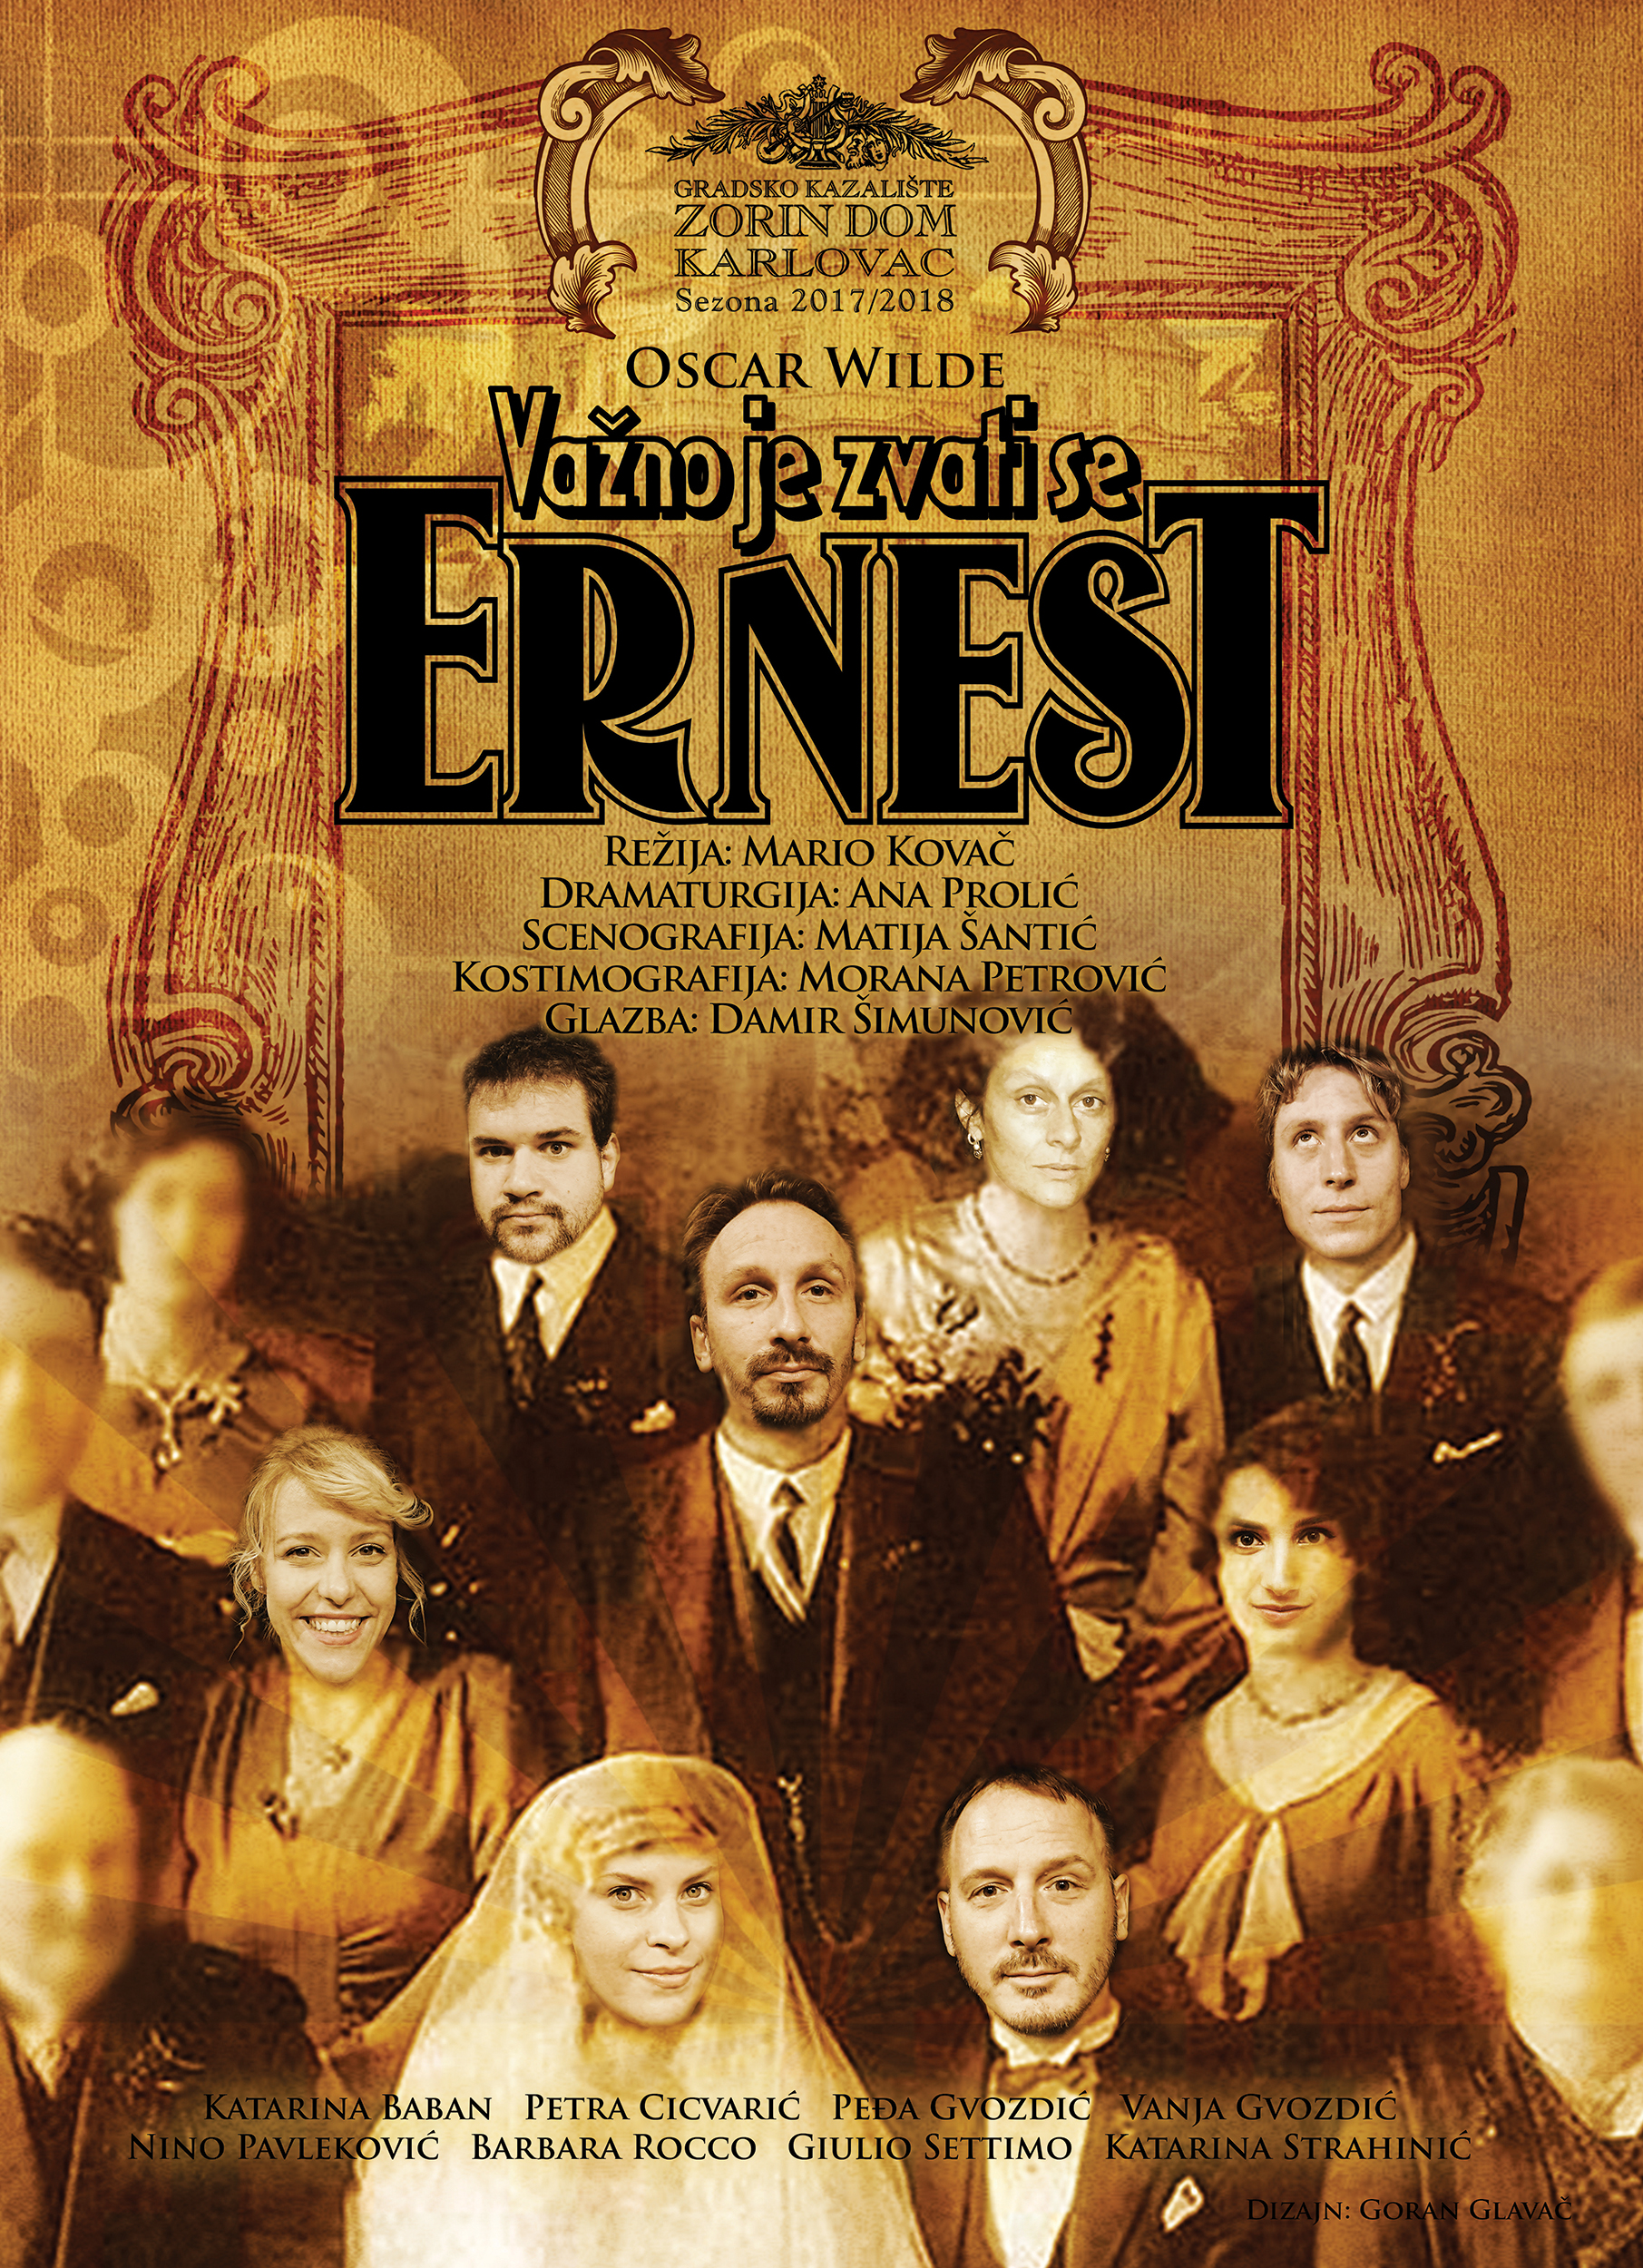 You are currently viewing Predstava “Važno je zvati se Ernest” na 10. Prologu